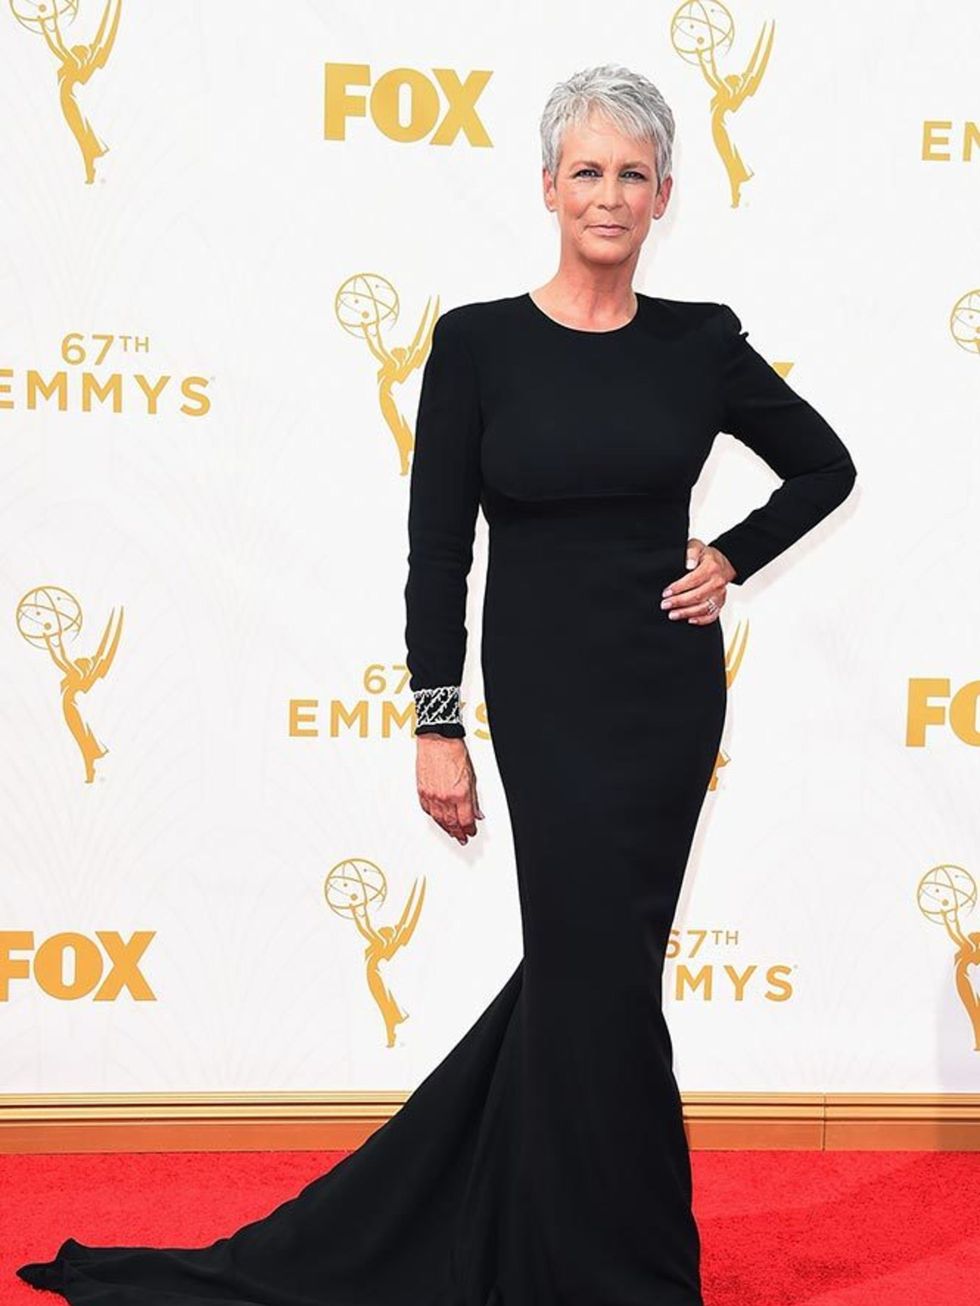 Jamie Lee Curtis at the Emmy Awards in LA, September 2015.